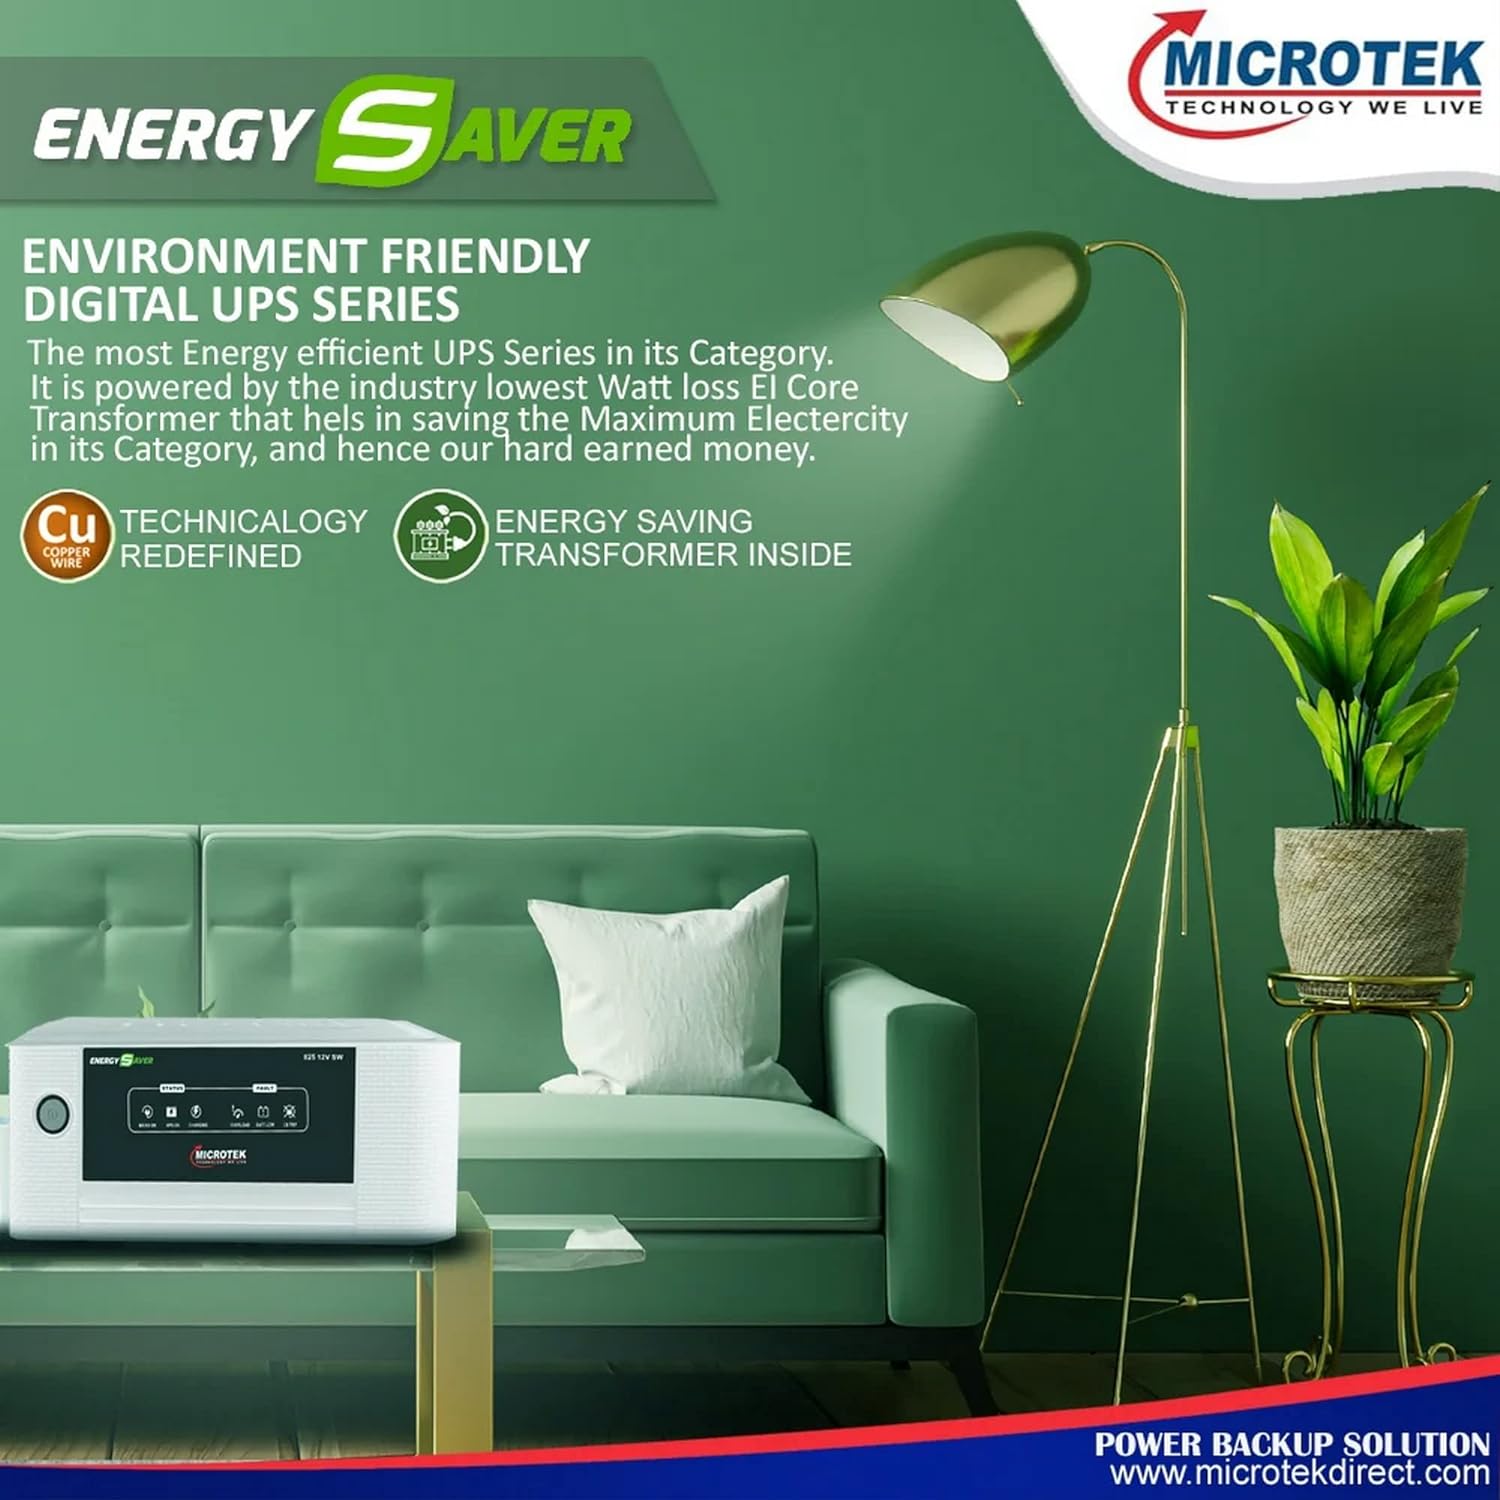 Microtek Energy Saver 825 Advanced Digital 715VA/12V Inverter, Support 1 Battery With 2 Year Warranty for Home, Office Shops